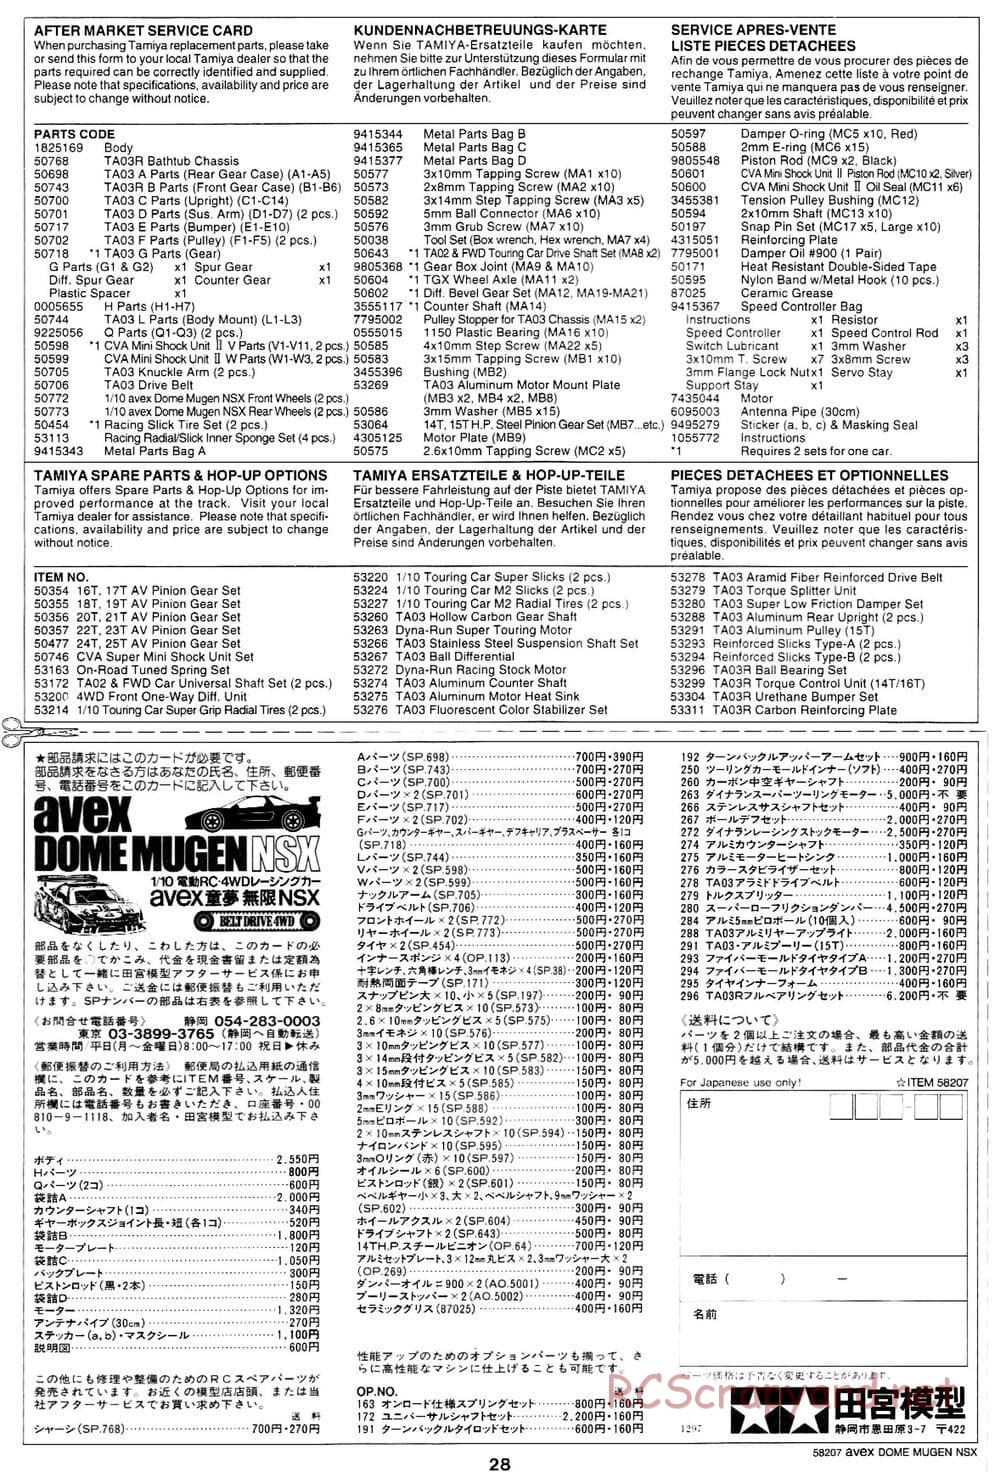 Tamiya - Avex Dome Mugen NSX - TA-03R Chassis - Manual - Page 28